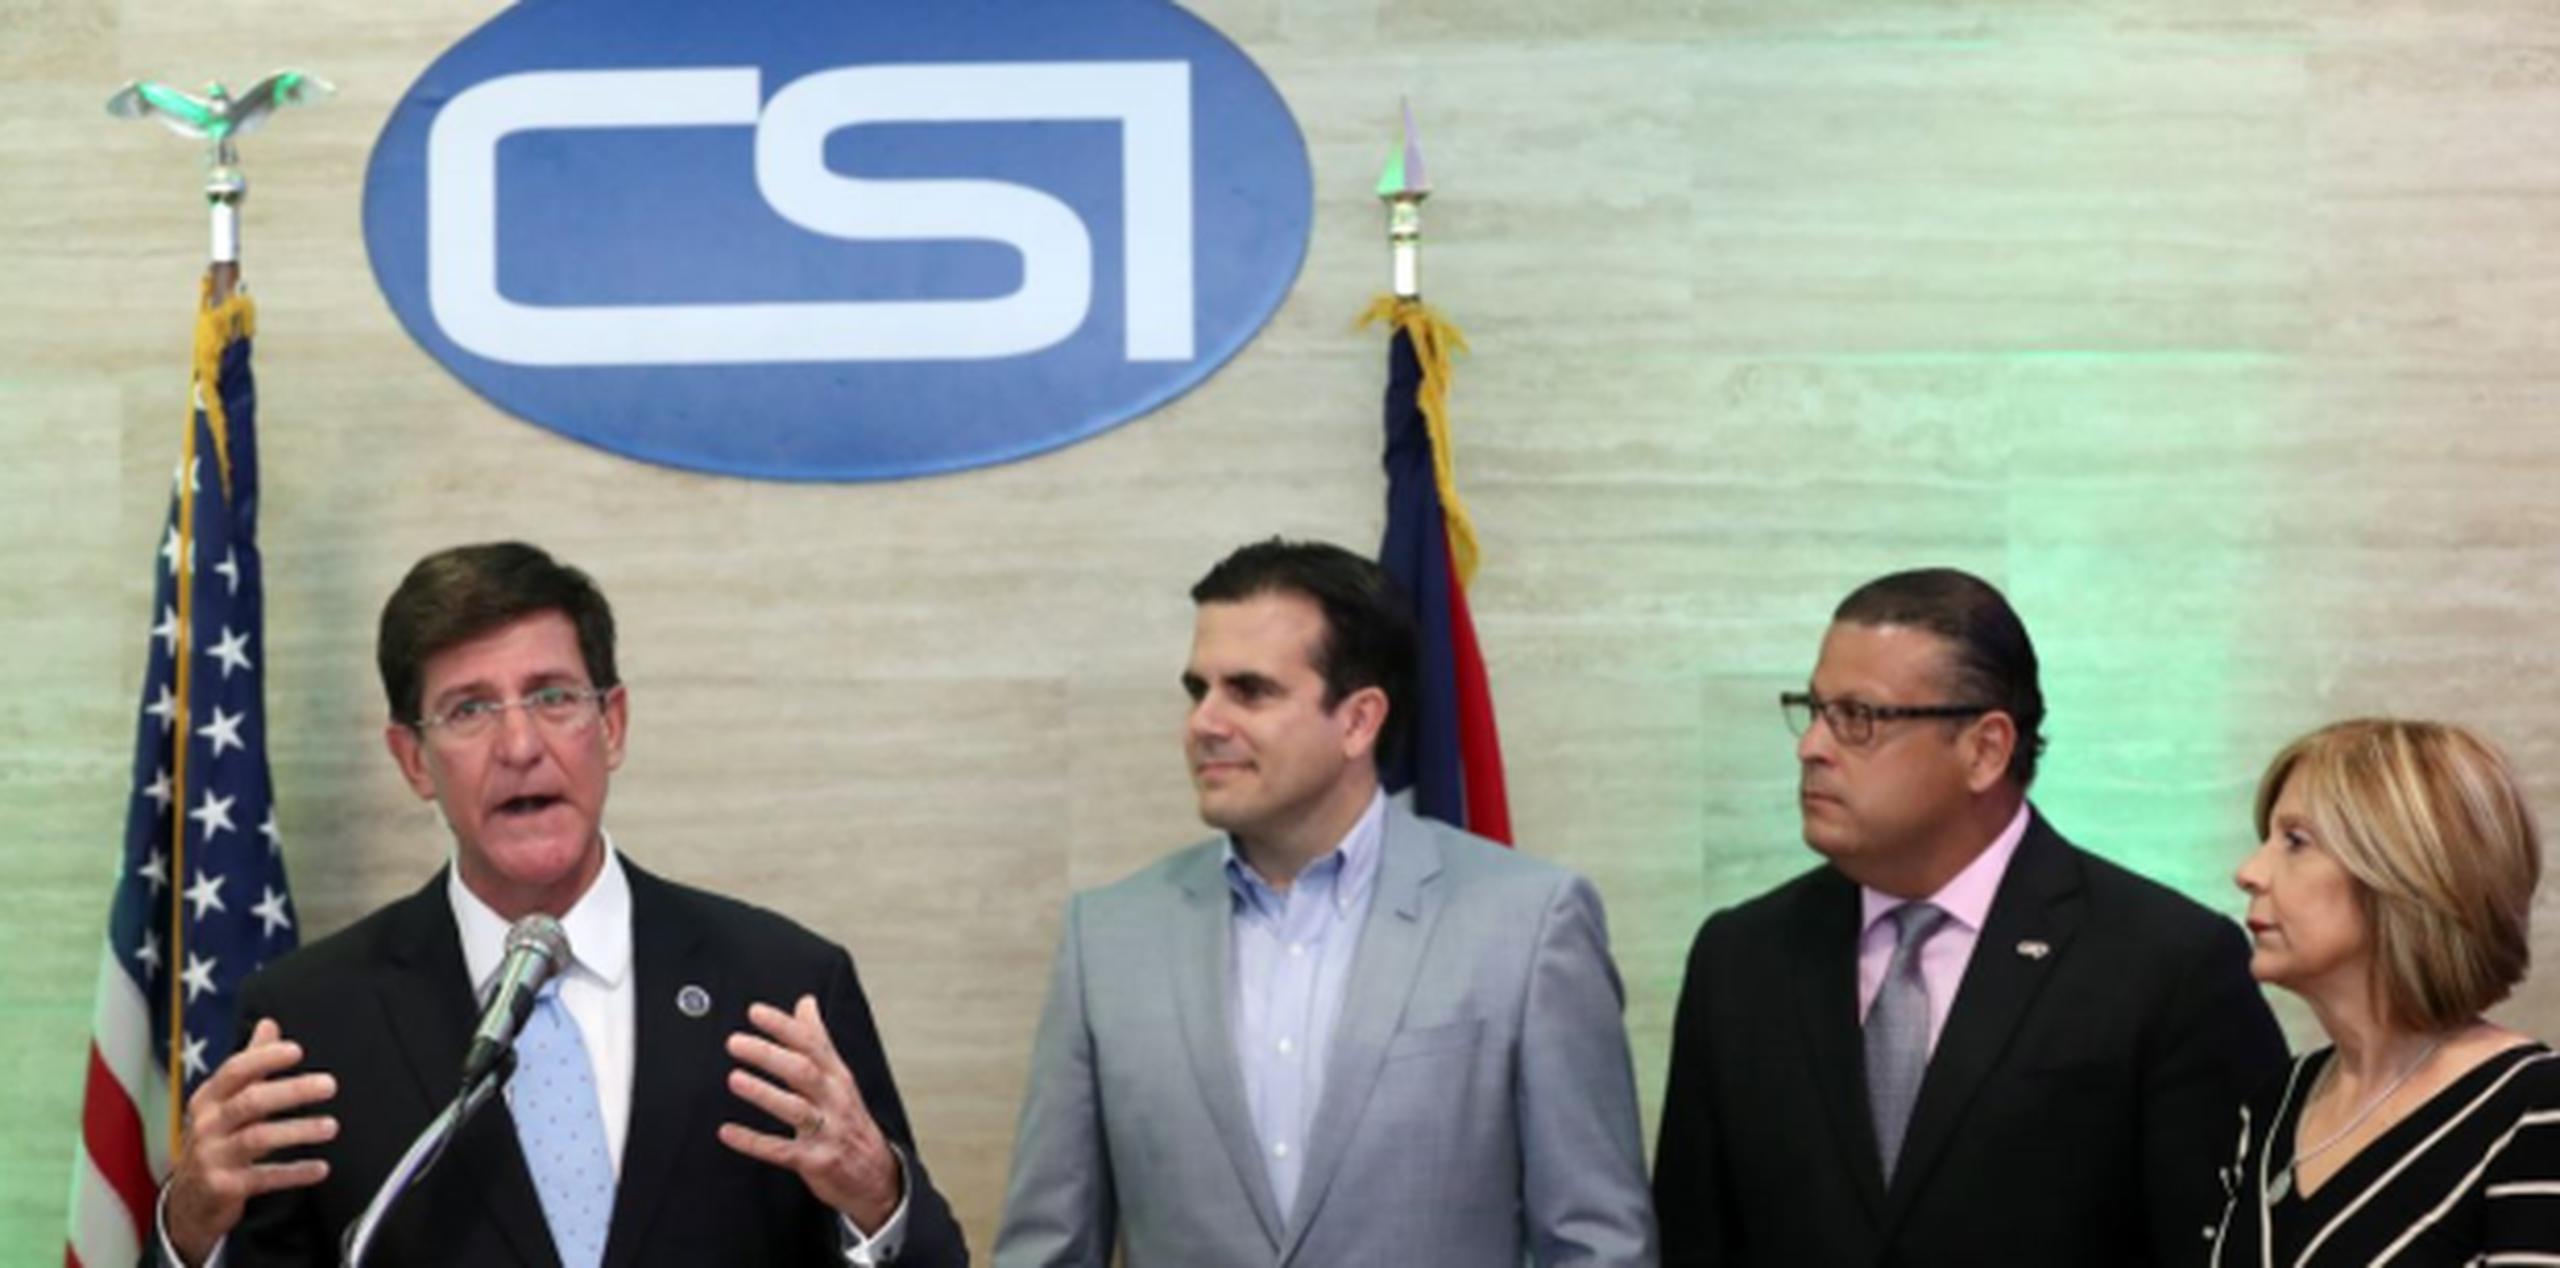 El primer CSI se inauguró el pasado marzo en Vieques.(juan.martinez@gfrmedia.com)